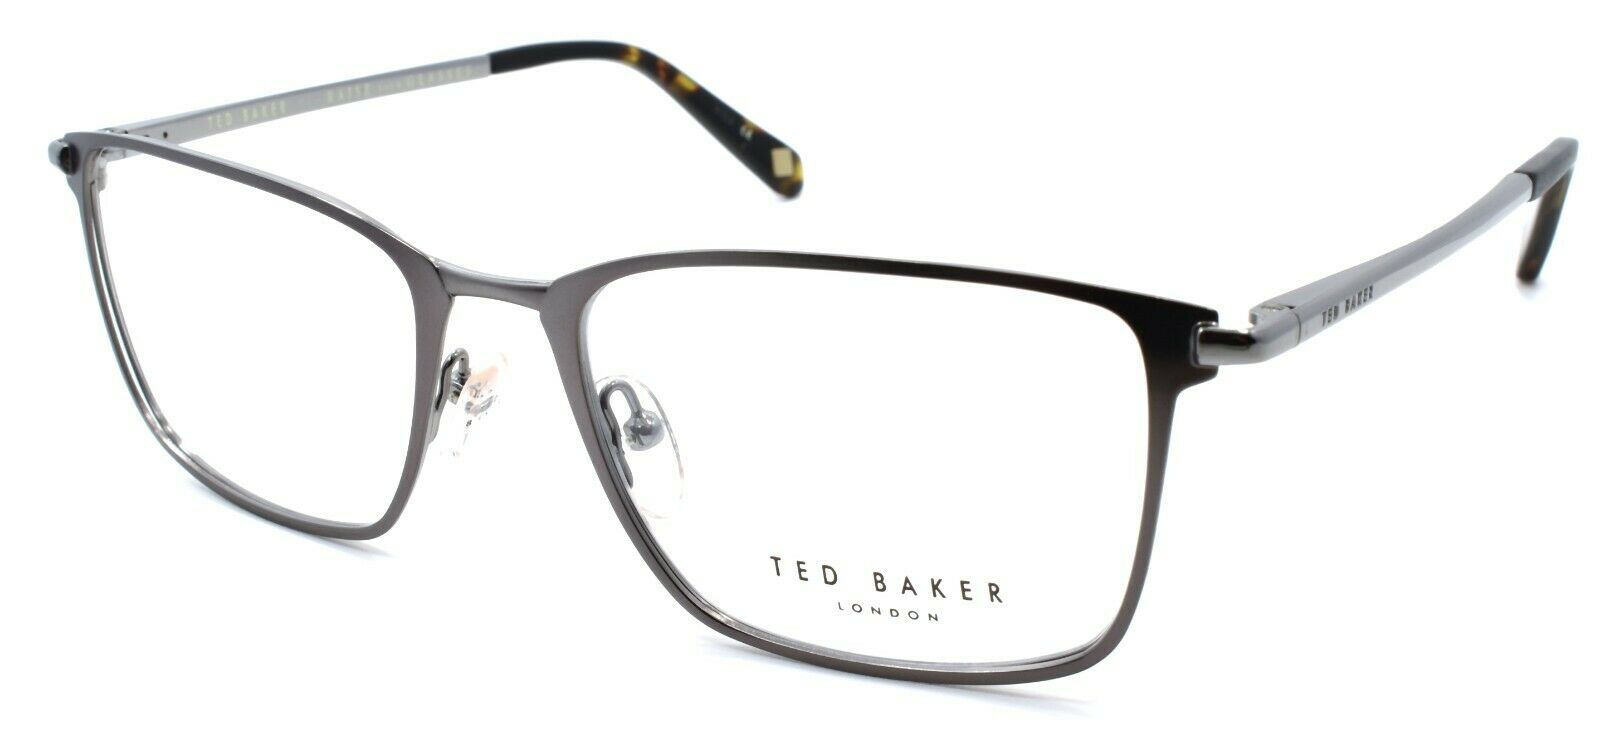 1-Ted Baker Drummond 4244 909 Men's Eyeglasses Frames 54-18-140 Gunmetal-4894327119103-IKSpecs